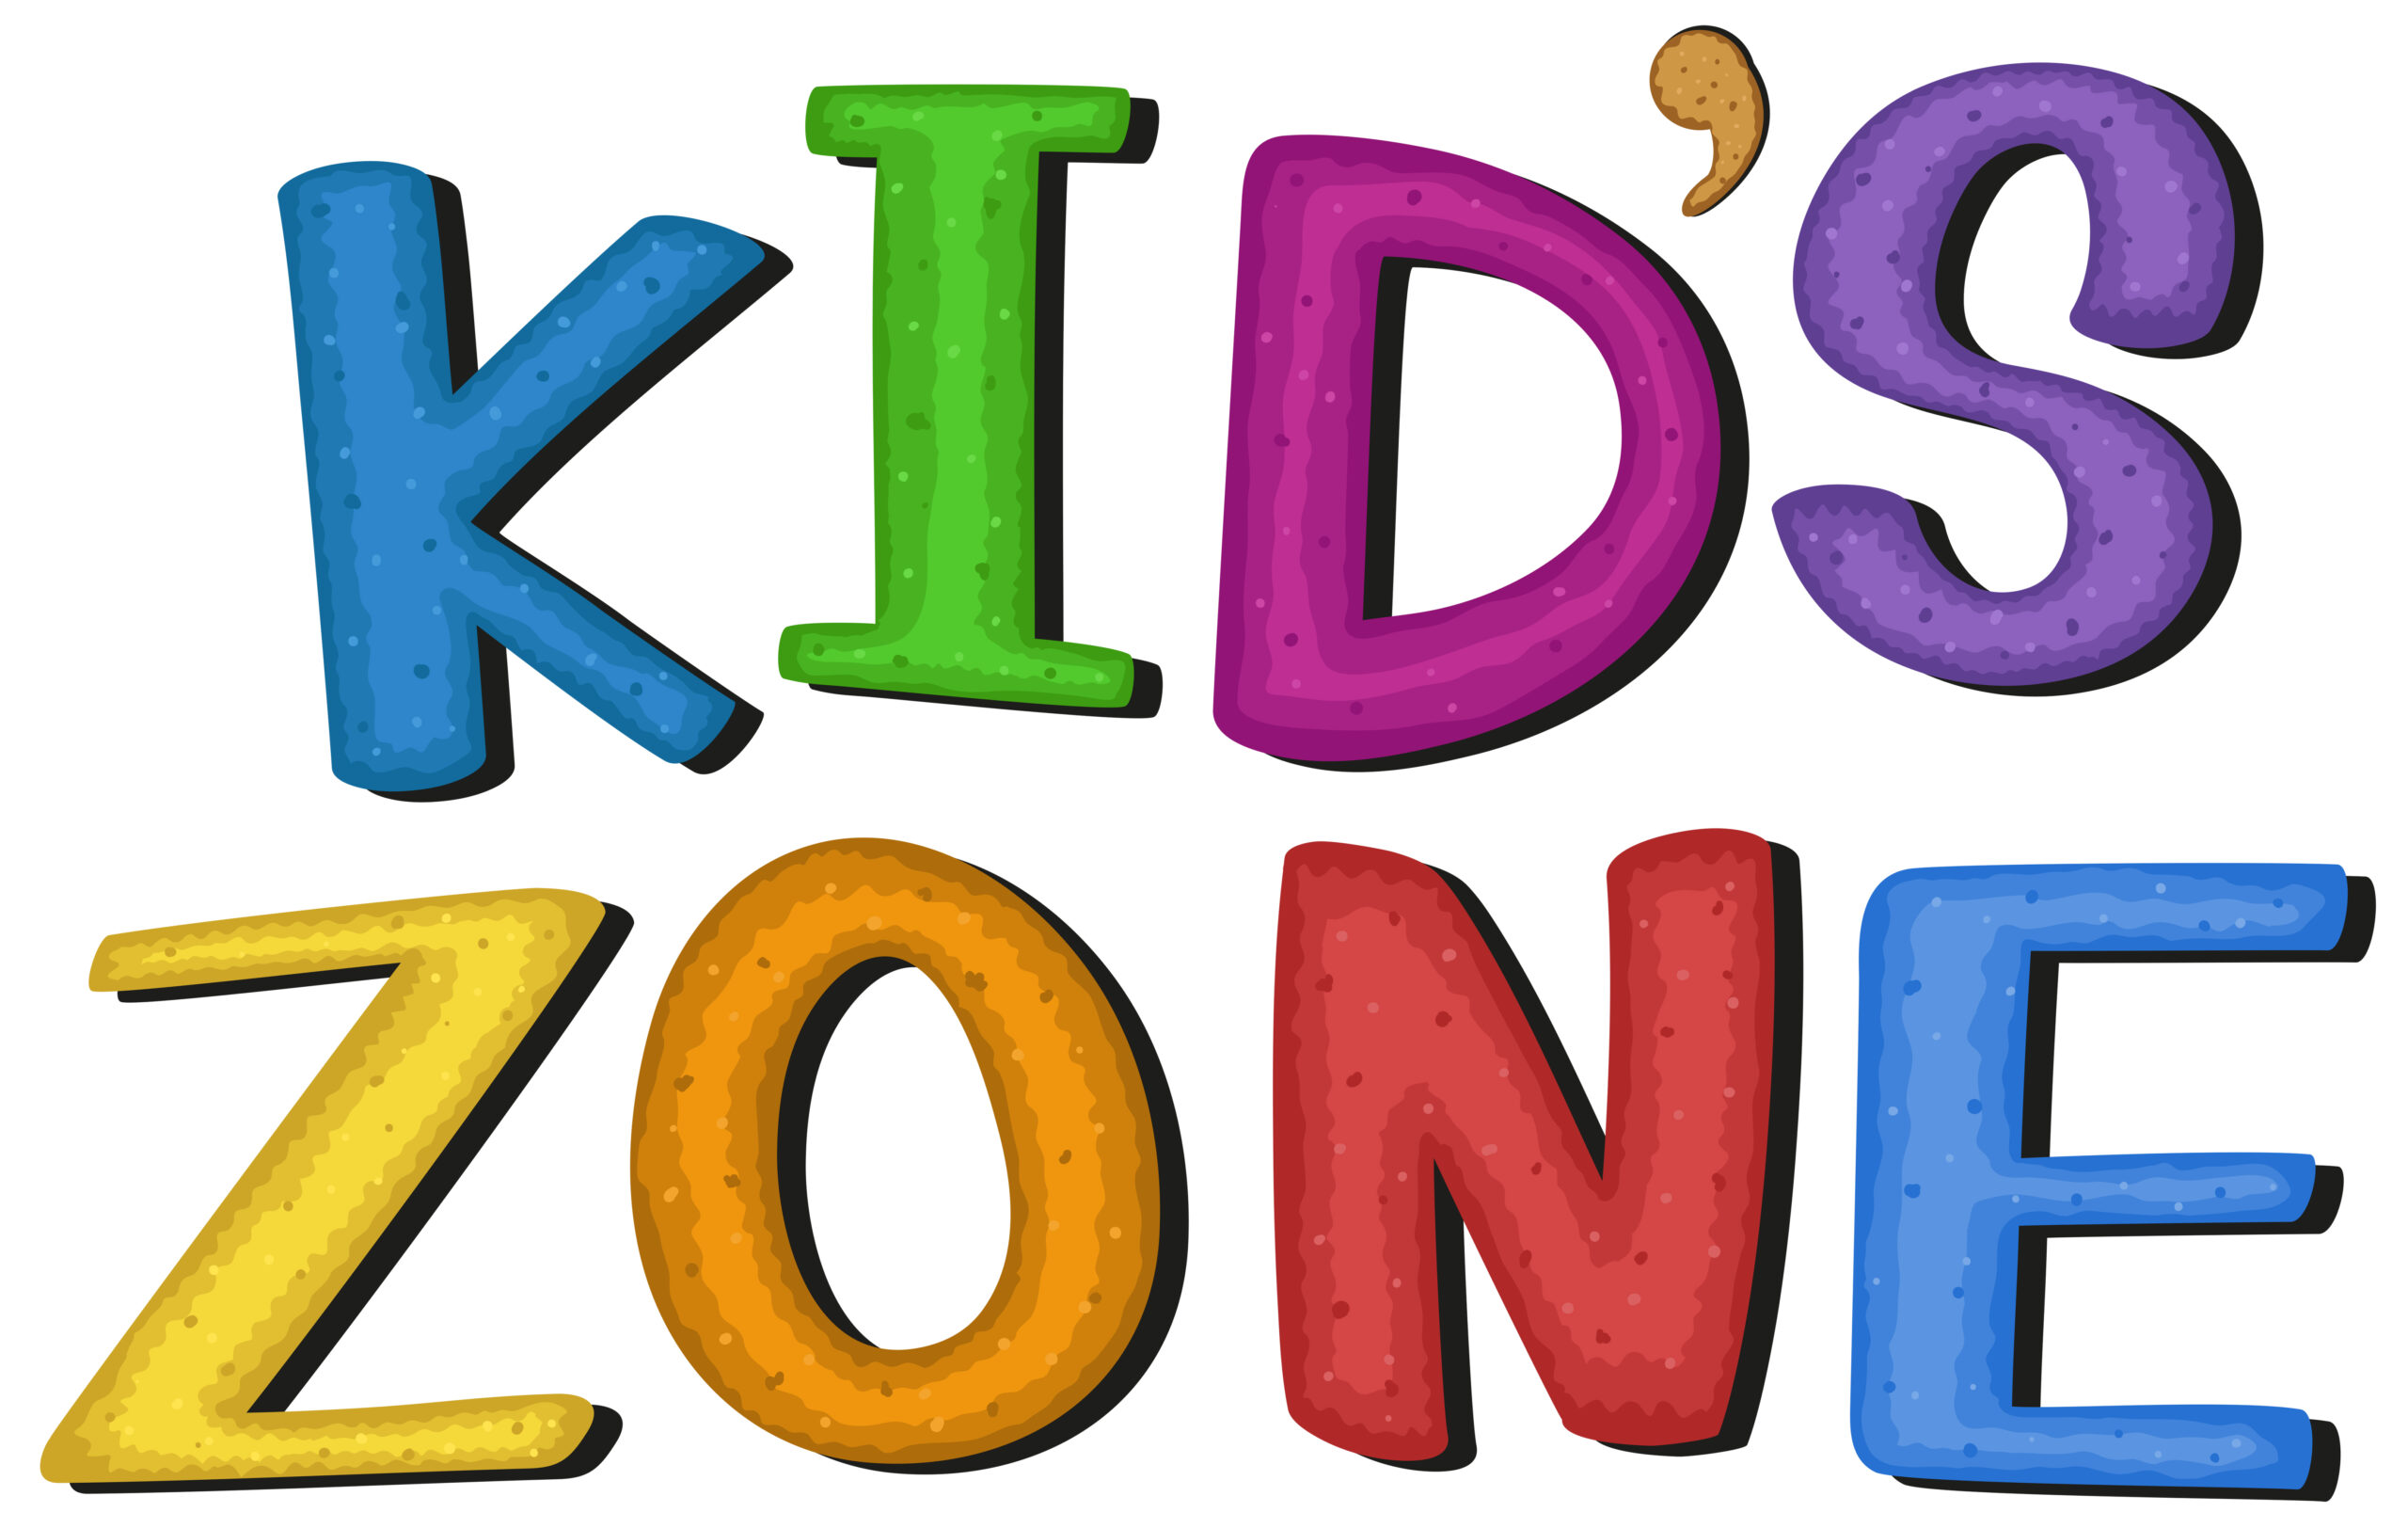 Kid's zone symbol on white background illustration